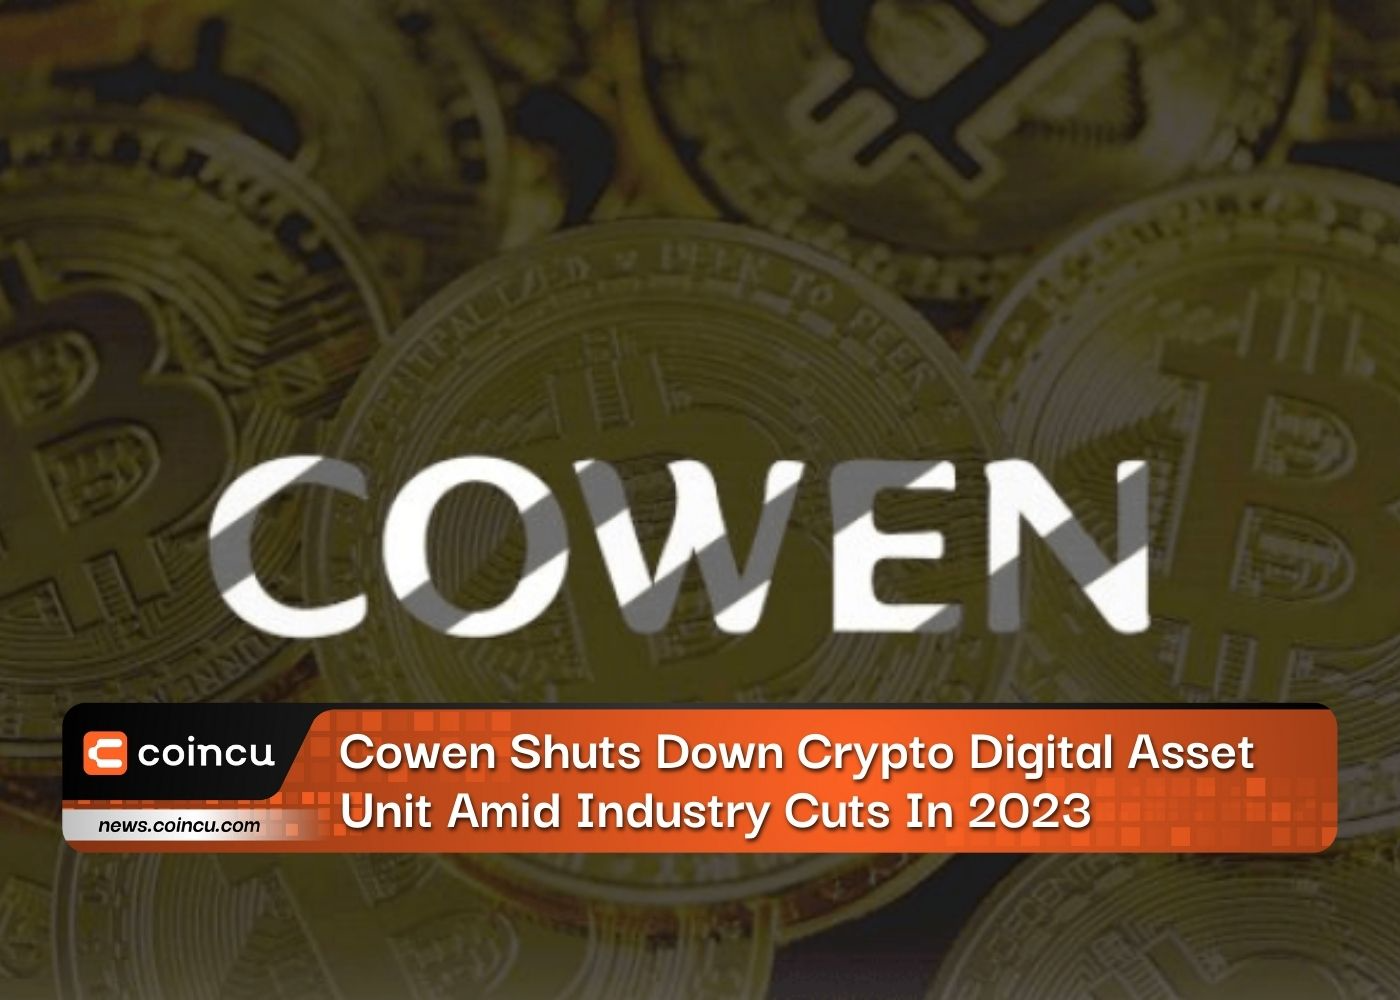 Cowen Shuts Down Crypto Digital Asset Unit Amid Industry Cuts In 2023